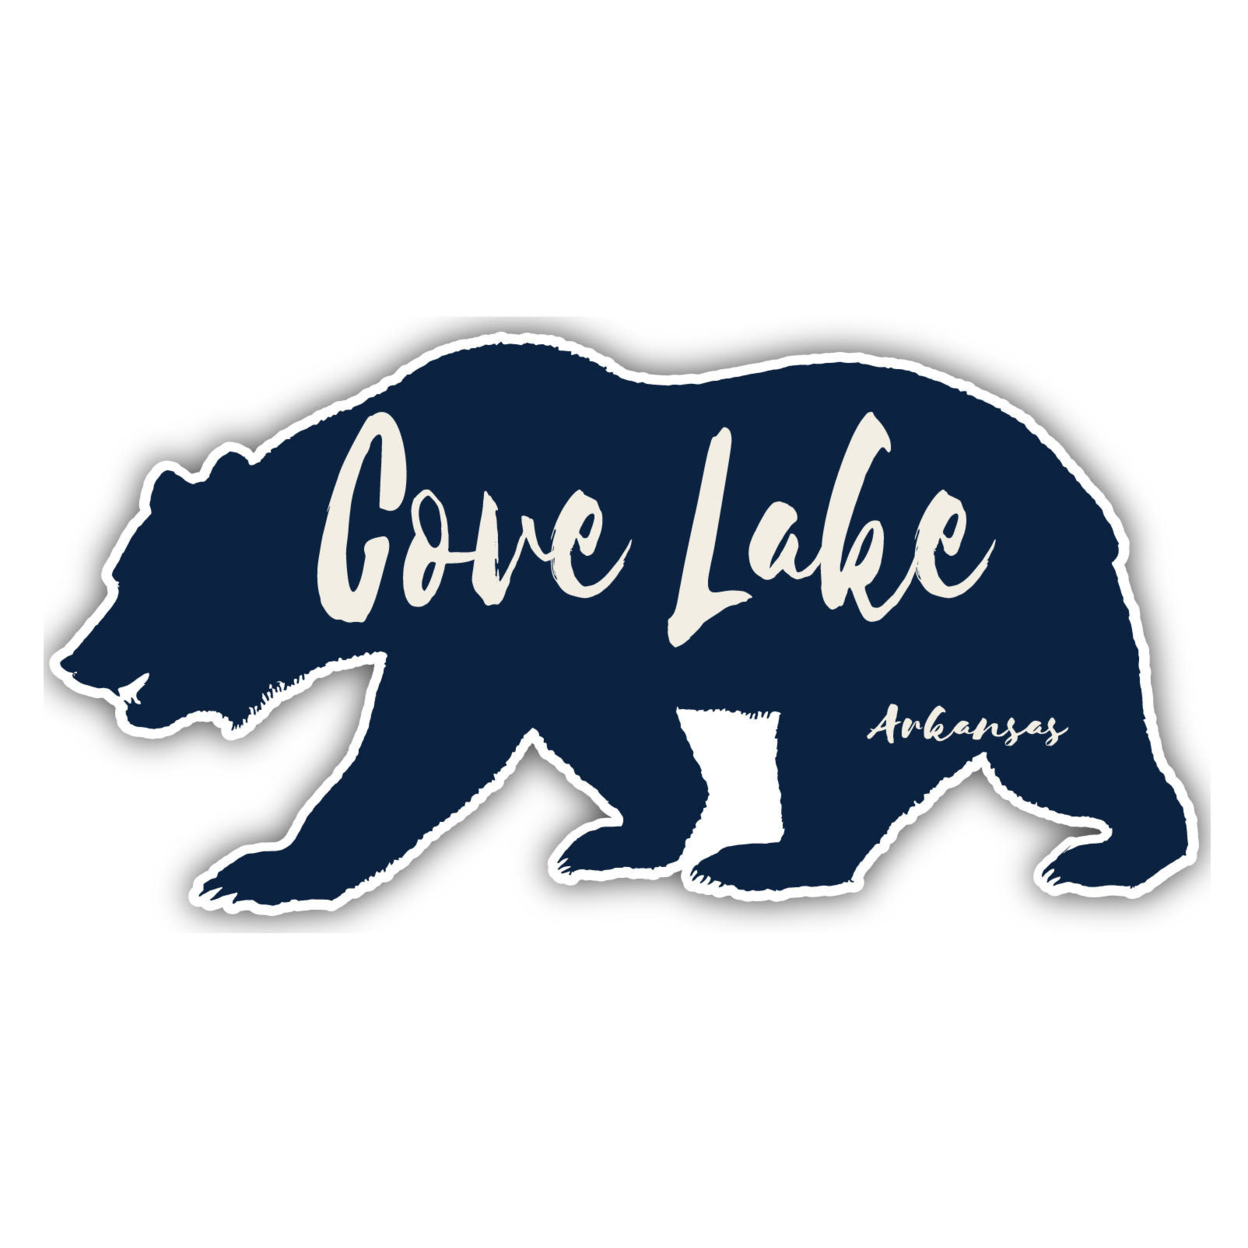 Cove Lake Arkansas Souvenir Decorative Stickers (Choose Theme And Size) - 4-Pack, 6-Inch, Bear